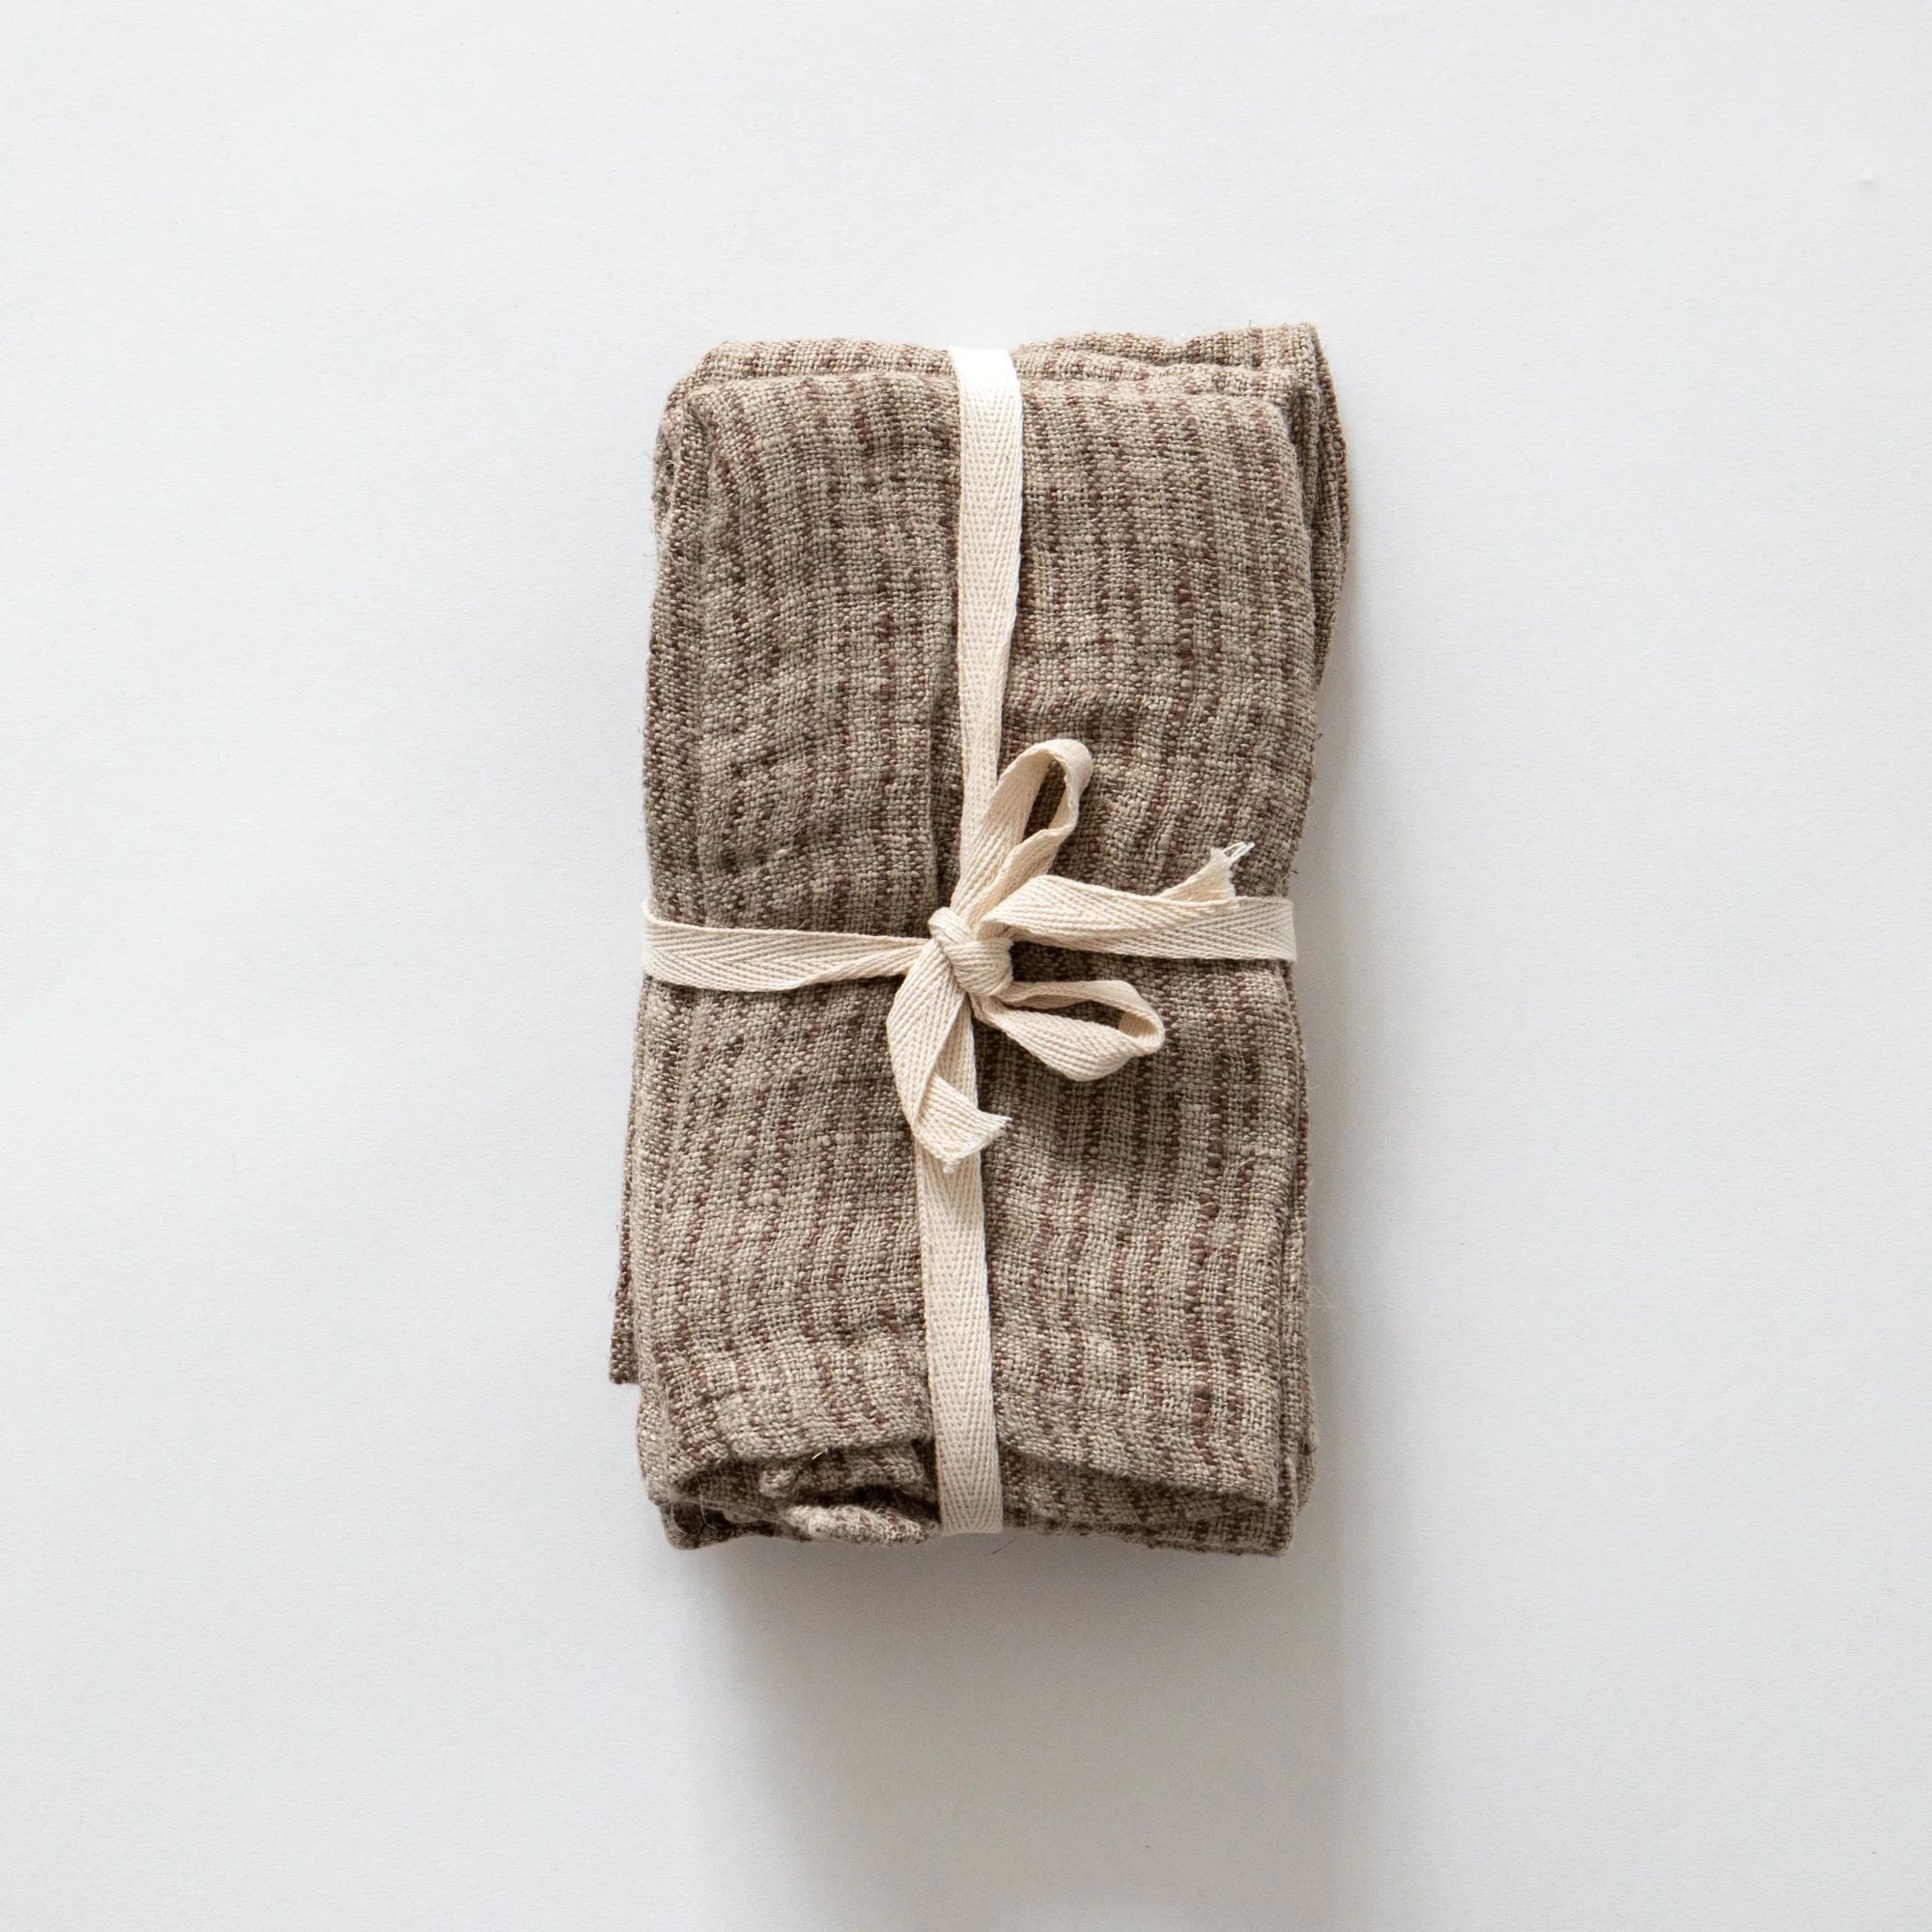 Woven Striped Linen Napkins | The Vintage Rug Shop